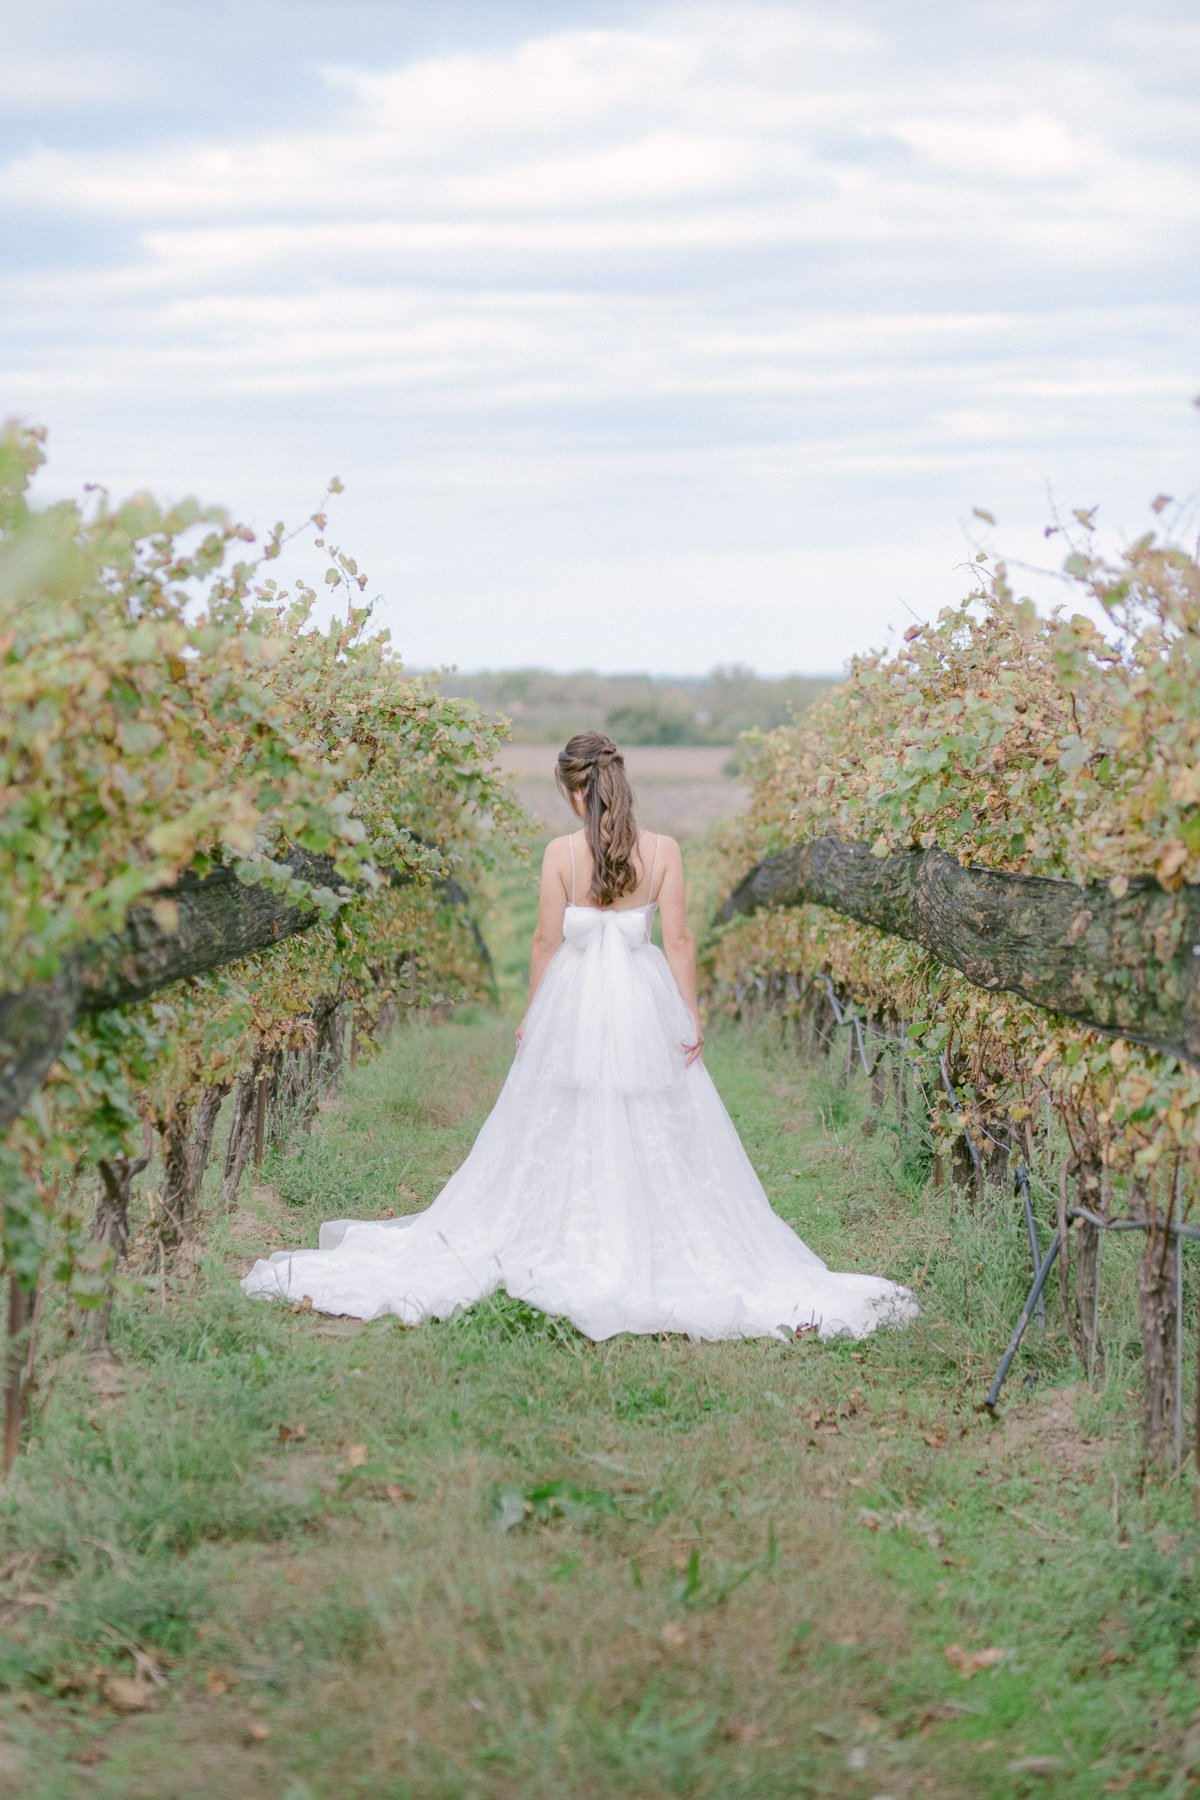 Ravine-Vineyard-Editorial-Wedding-Vineyard-Bride-Photo-By-Paolo-Manrique-Photography-0090.JPG